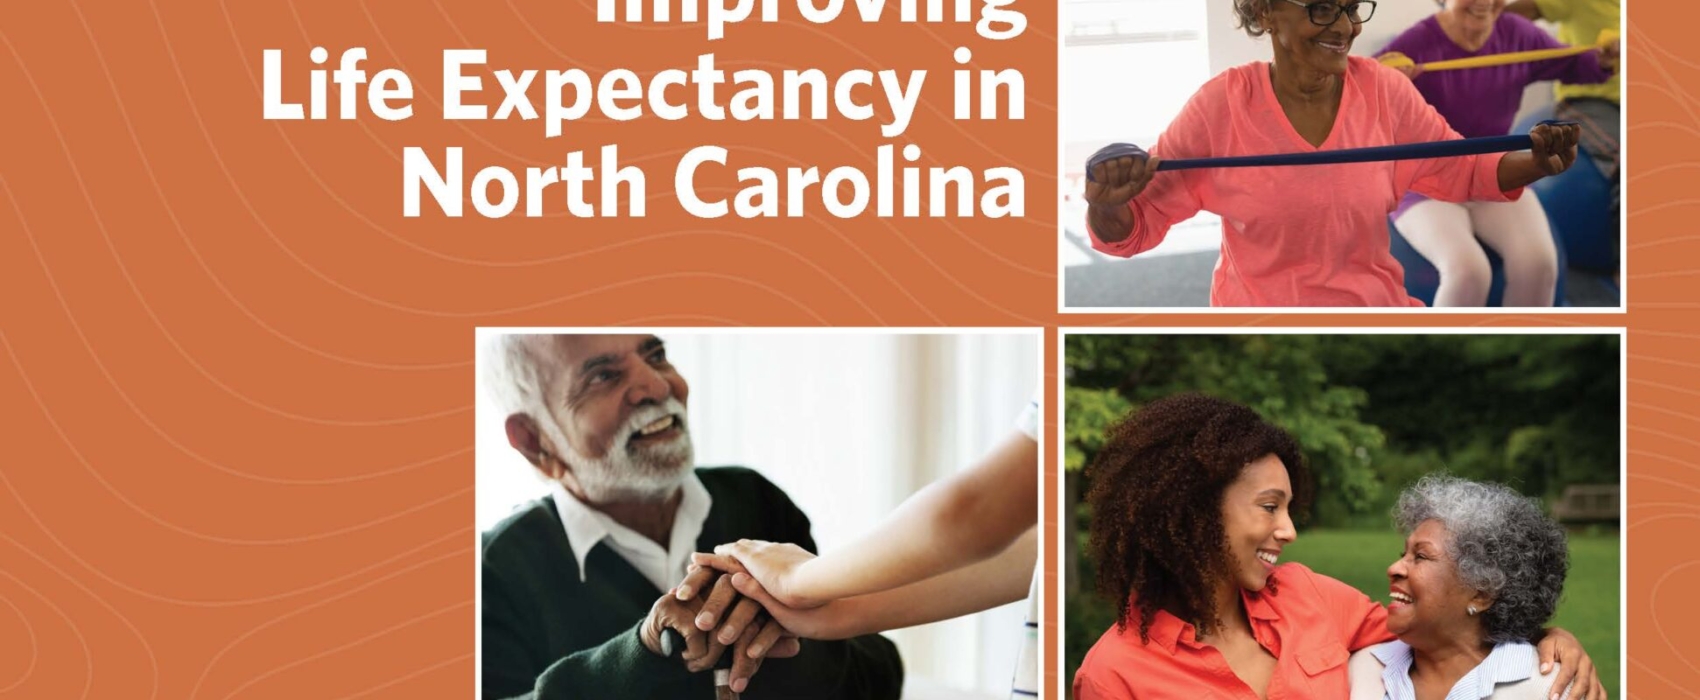 Improving Life Expectancy in North Carolina